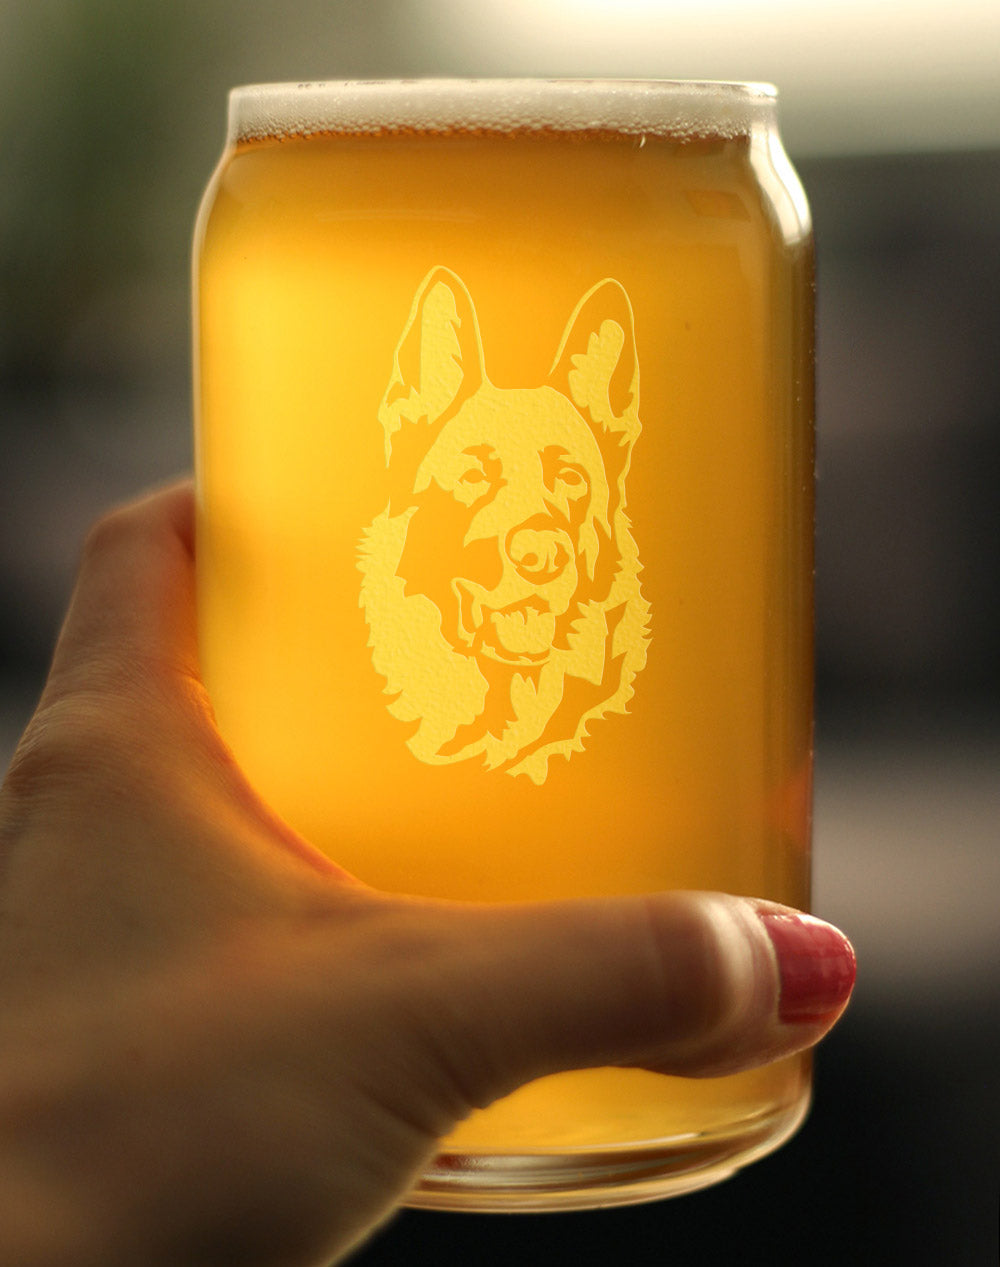 German Shepherd Happy Face - Beer Can Shaped Pint Glass Gifts for Beer Drinking Men &amp; Women - Fun German Shepherds Decor